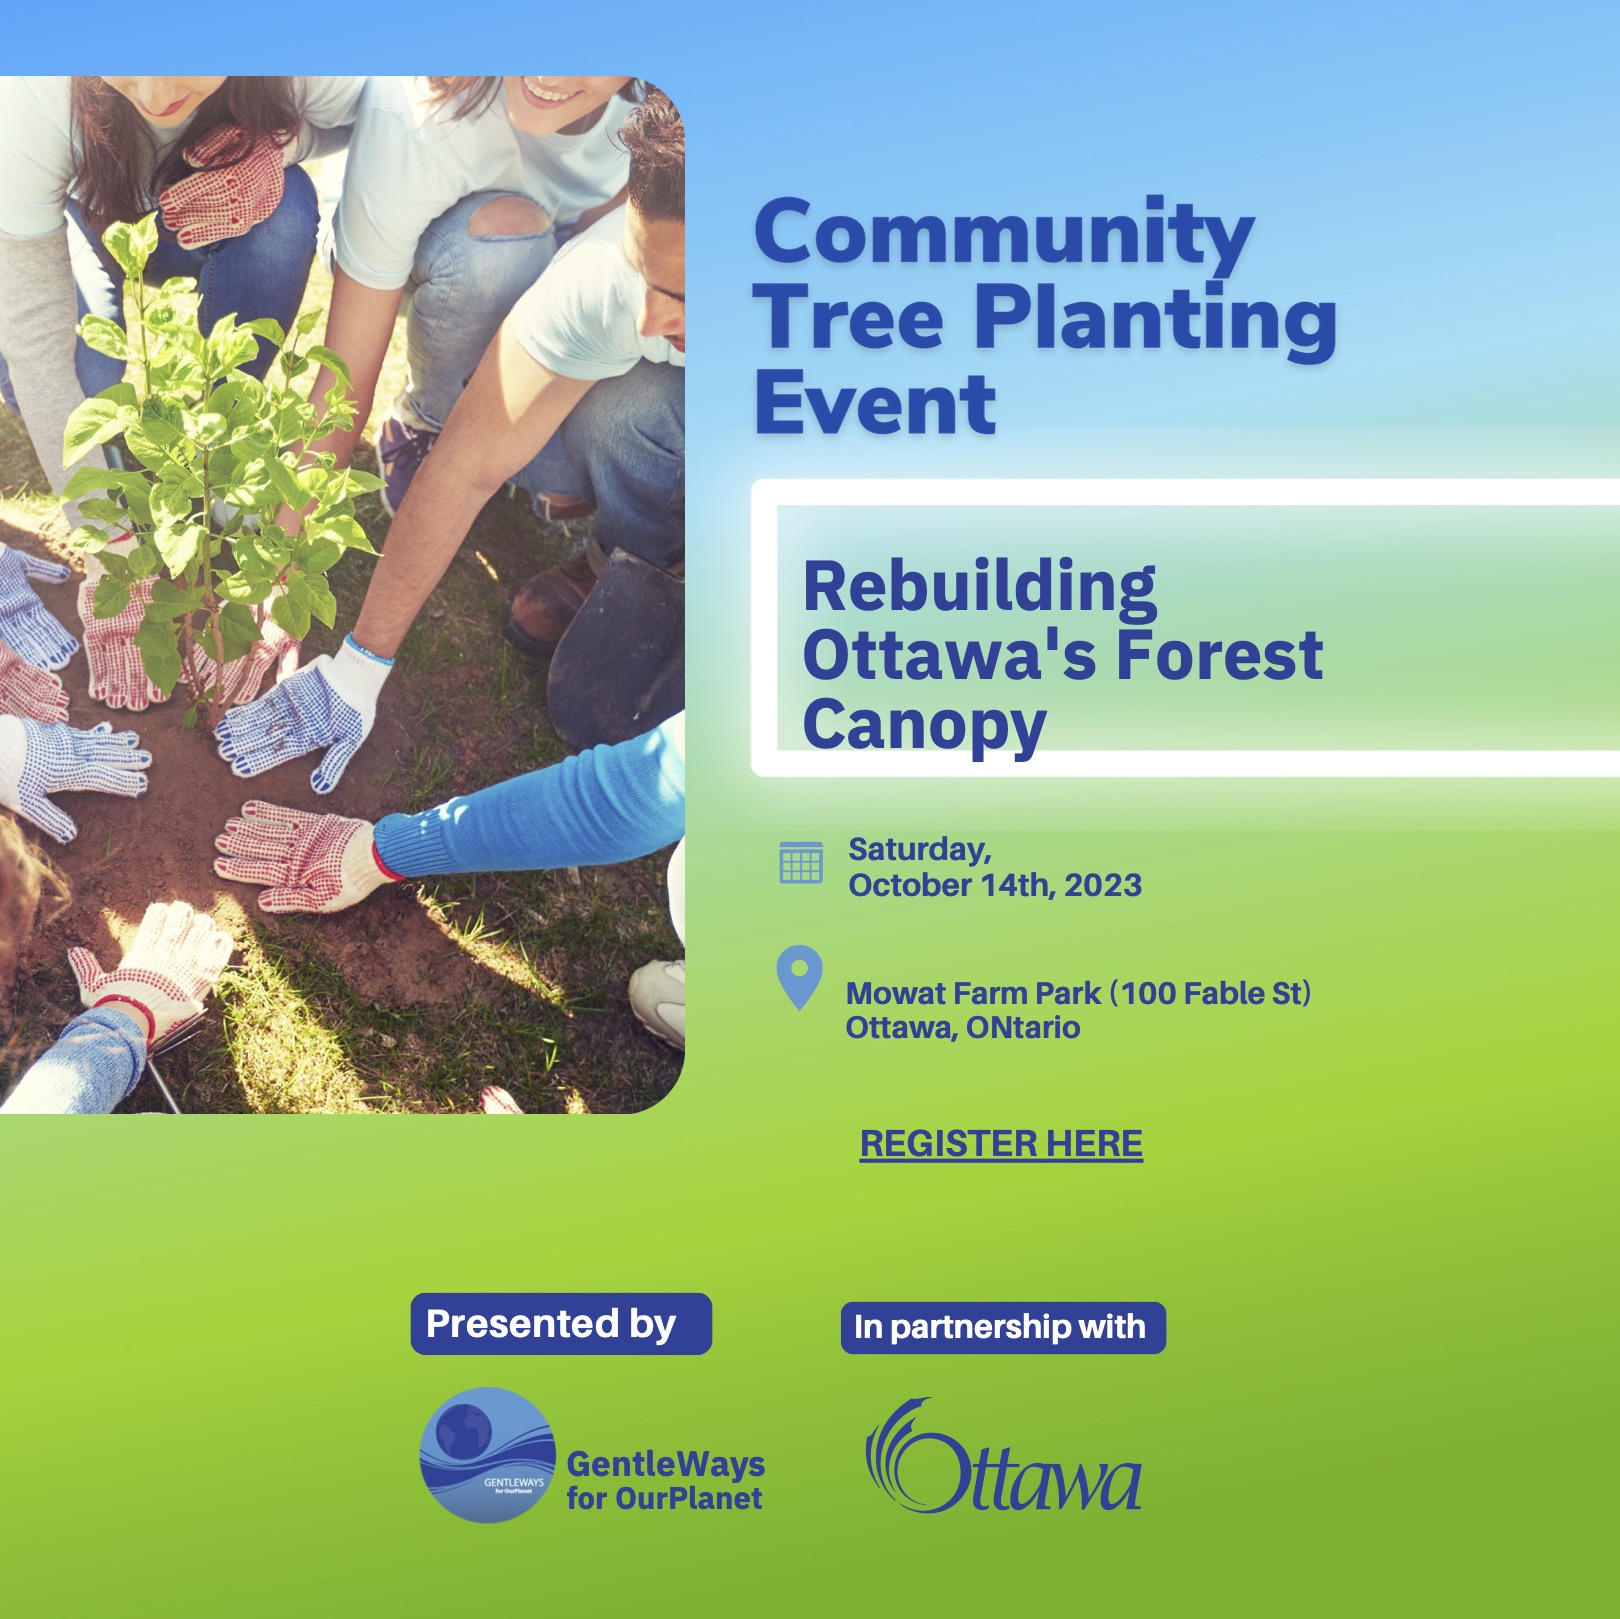 Community Tree Planting Event